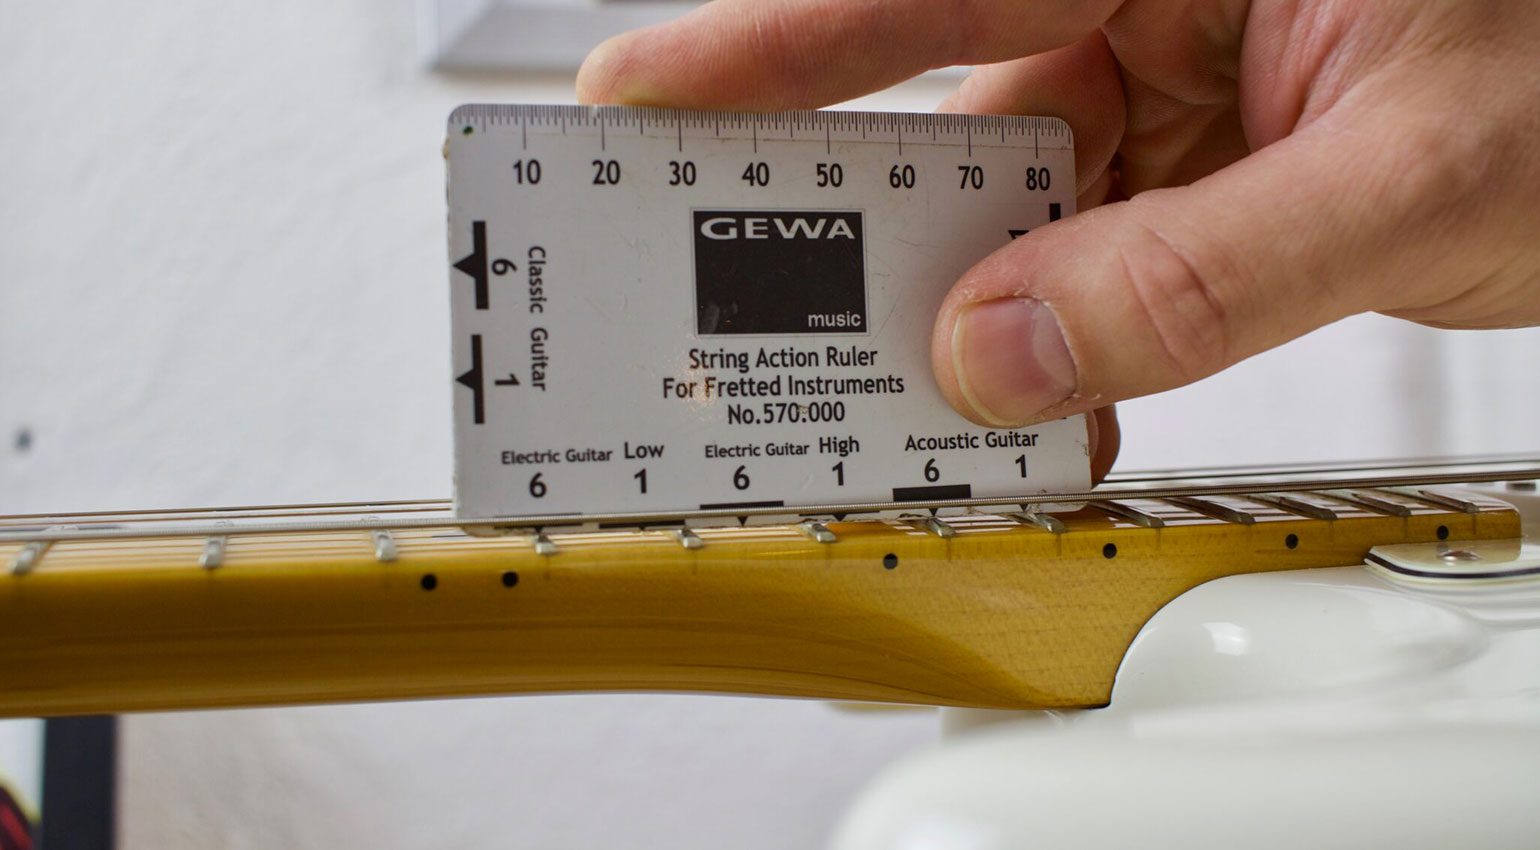 Guitar action ruler